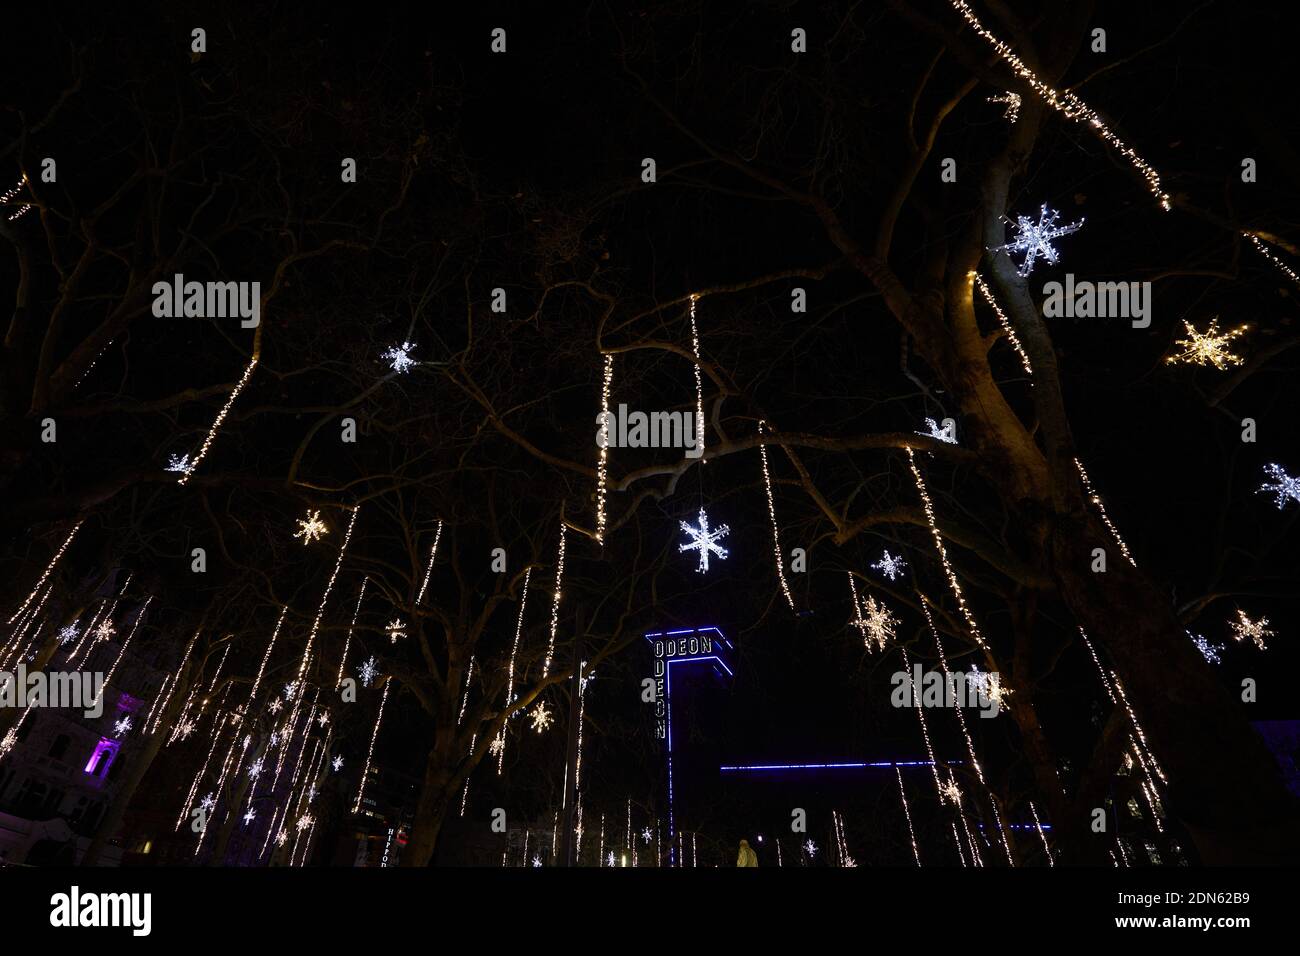 London, UK. - 2 Dec 2020: Festive lights adorn Leicester Square for Christmas 2020. Stock Photo